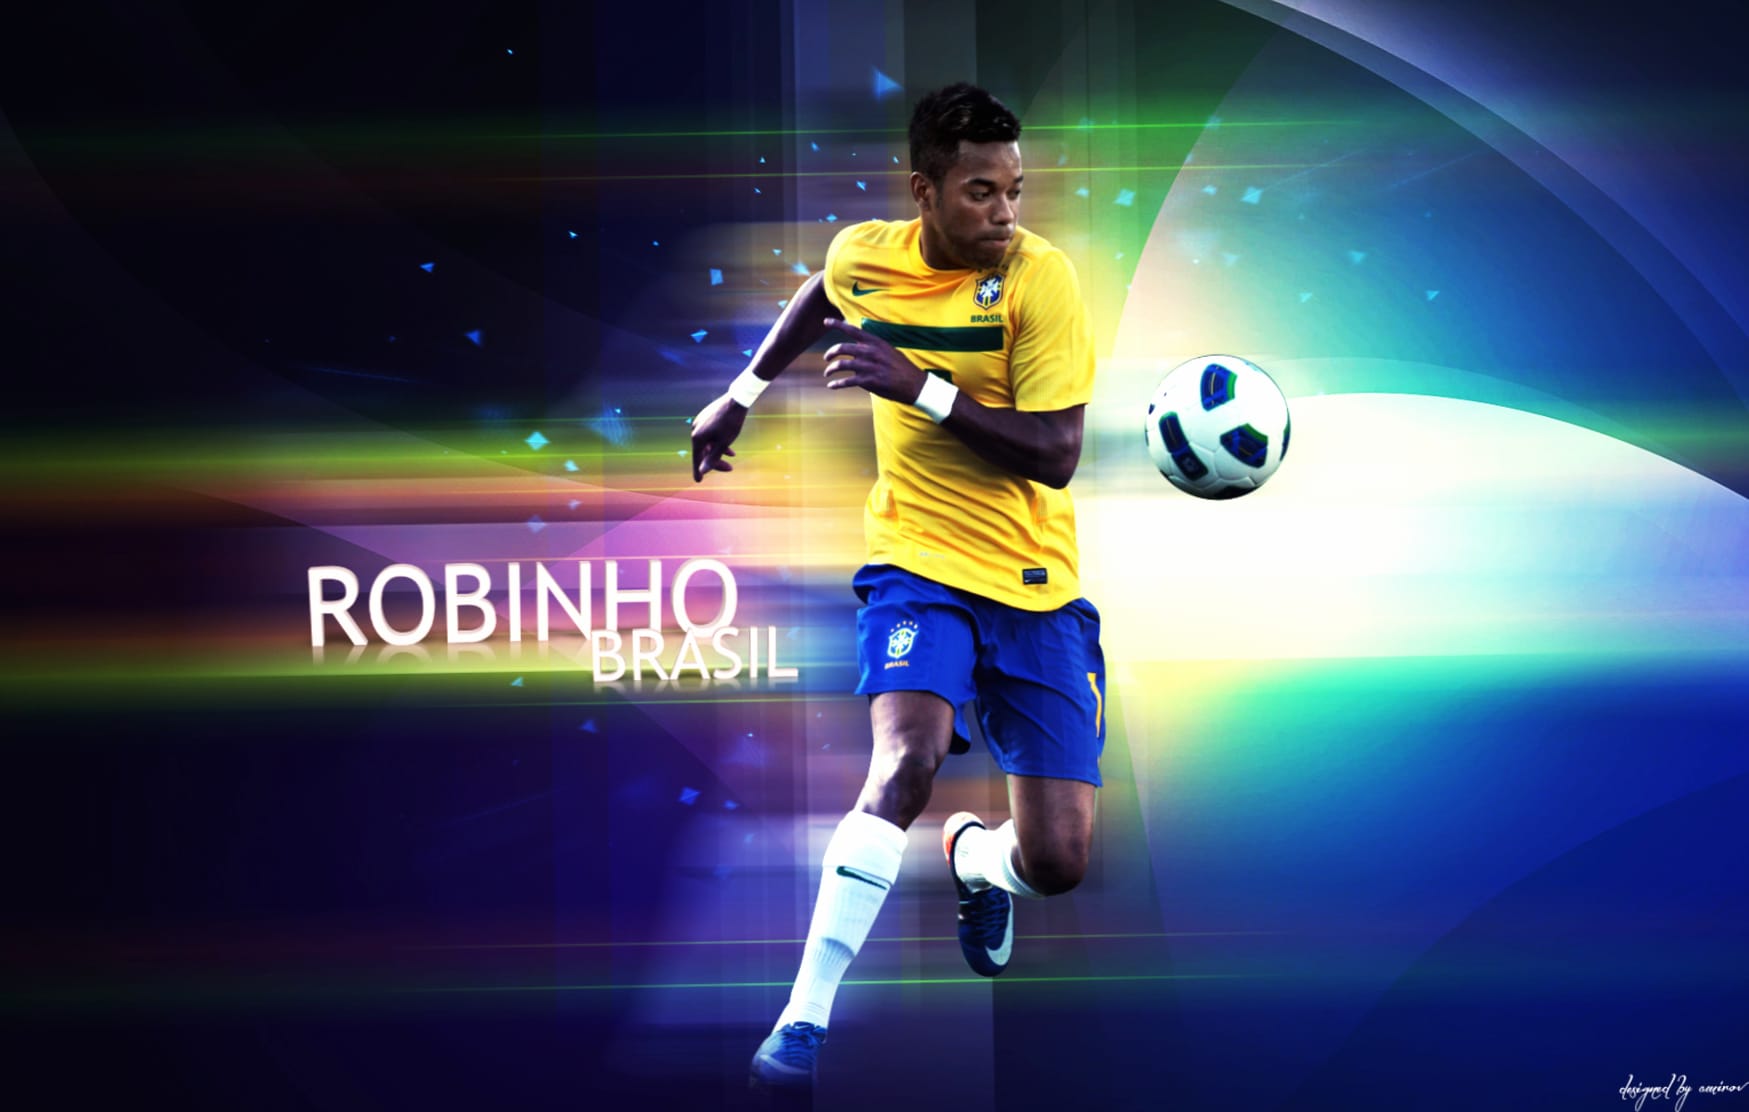 Robinho at 1024 x 1024 iPad size wallpapers HD quality